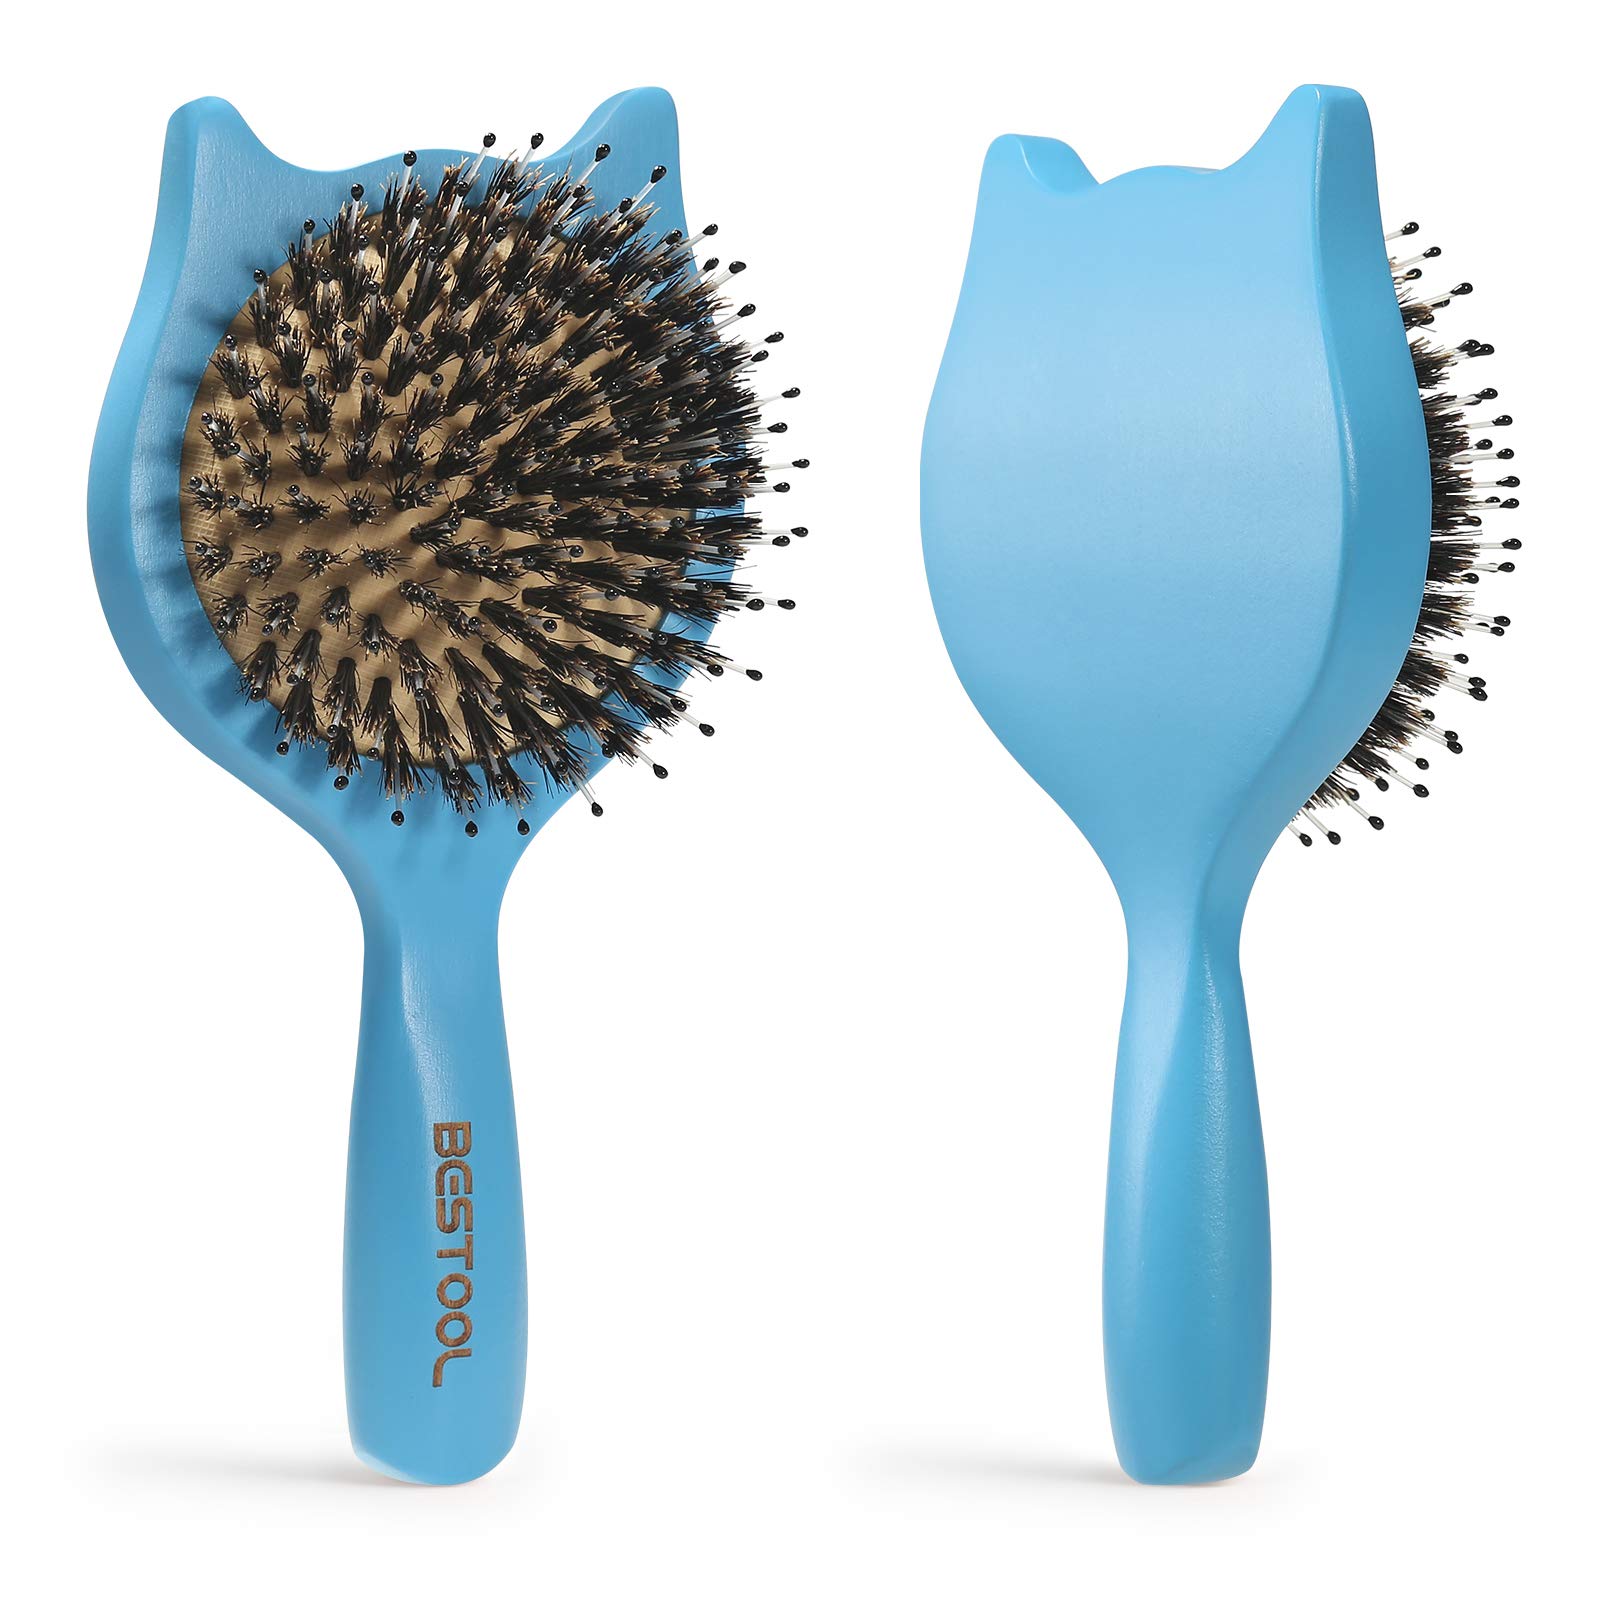 Small Extra Boar Bristle Hairbrush - Blue